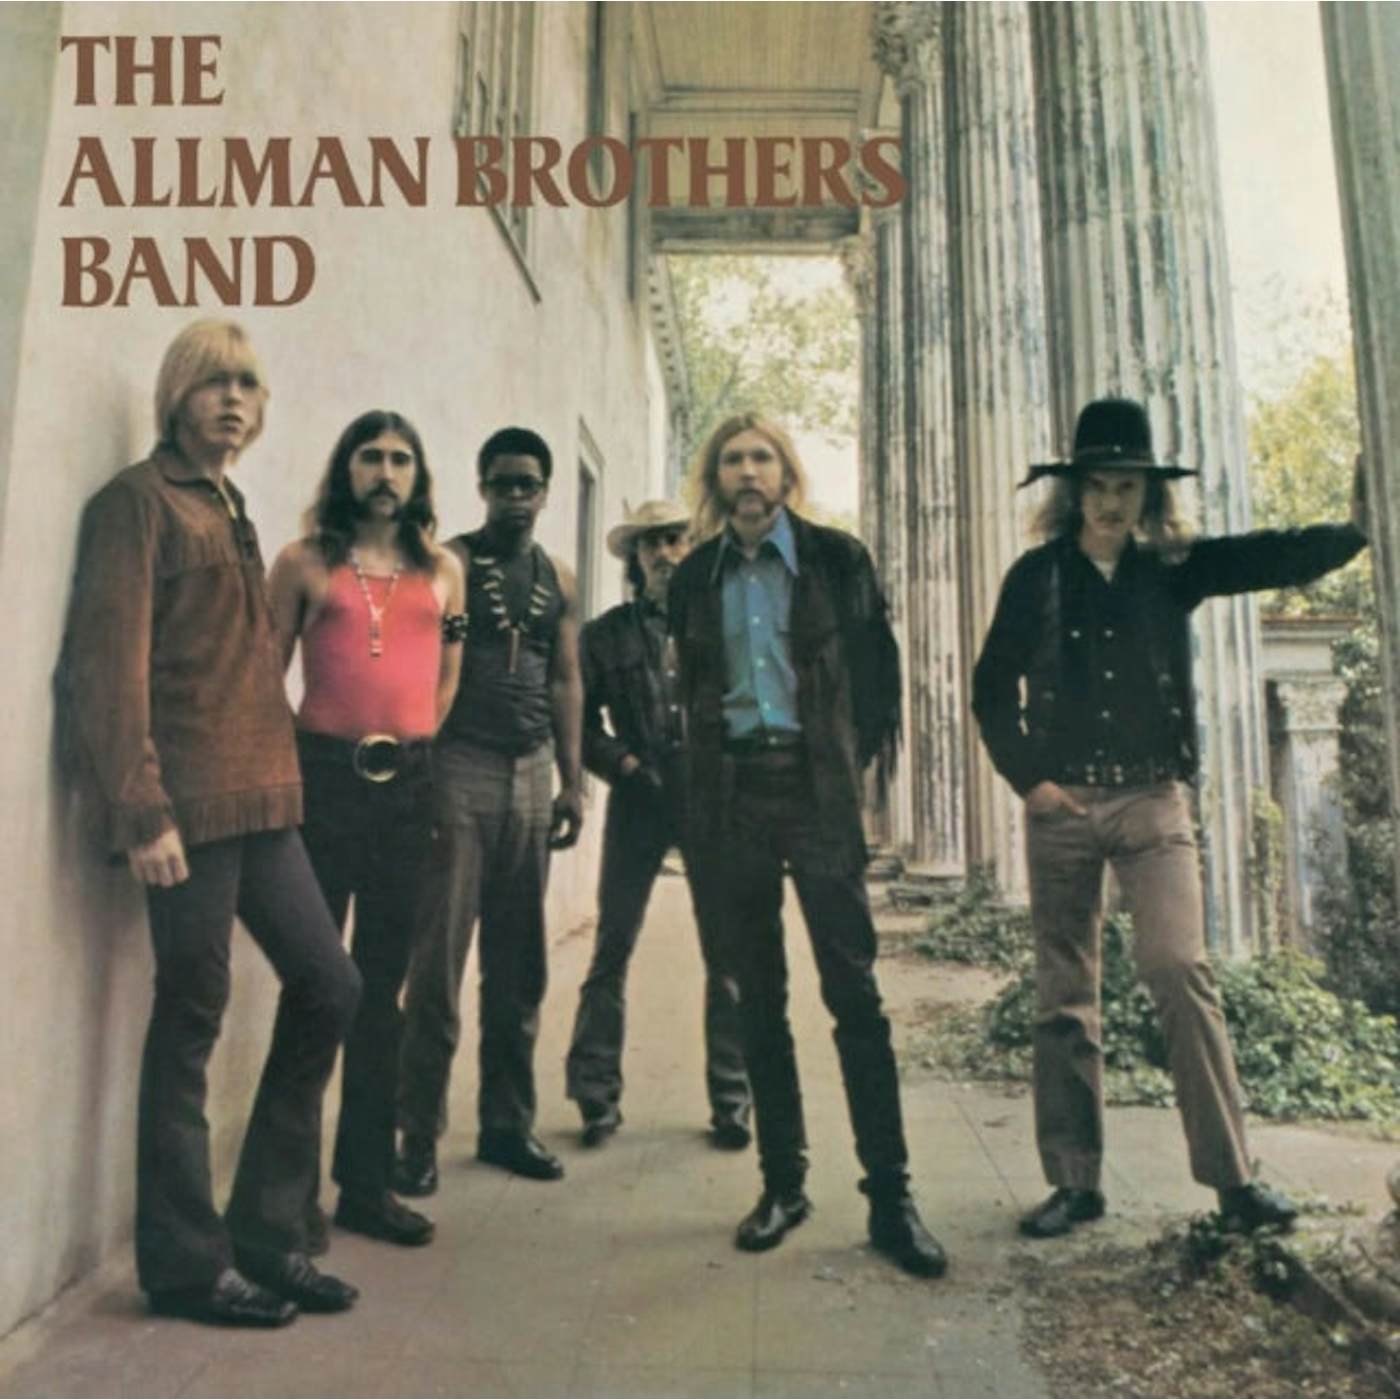 Allman Brothers Band LP - The Allman Brothers Band (Vinyl)